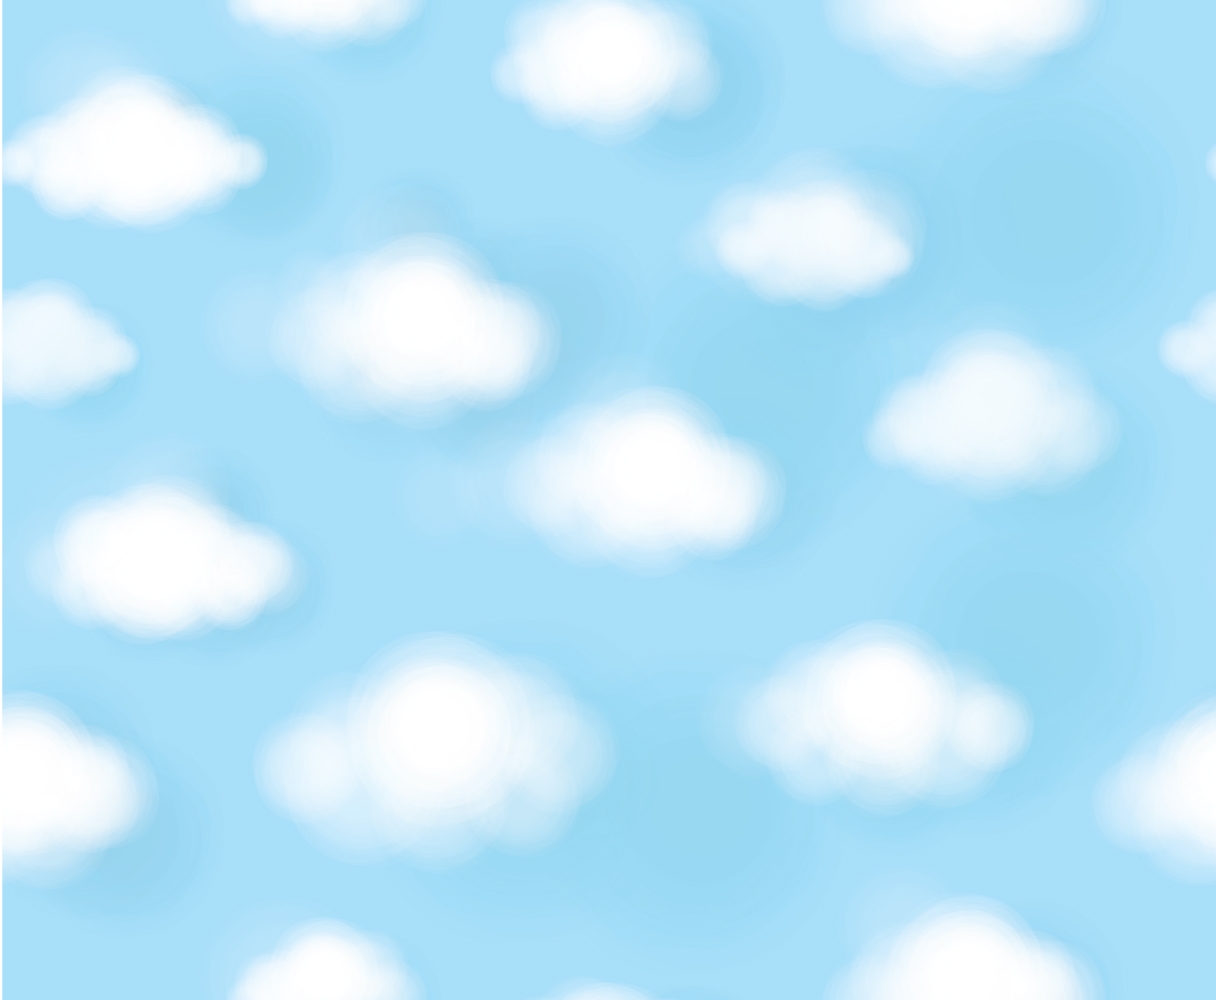 Cute white Puffy Clouds over a Blue Sky - Dreamy Wallpaper ...